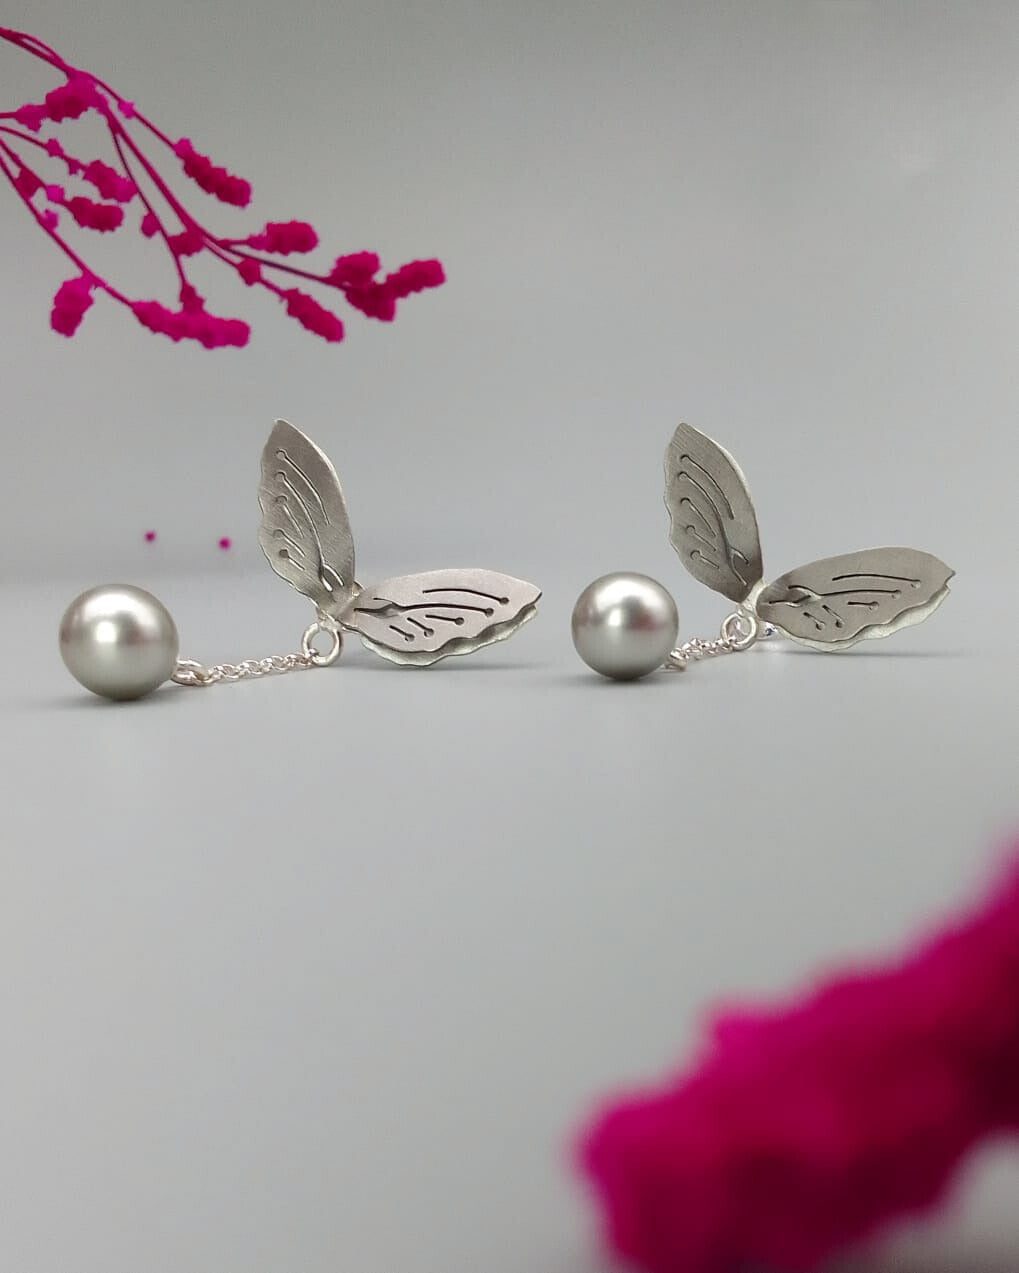 Enchanting Butterfly Pendant Chandelier Earrings: A Symphony of Style